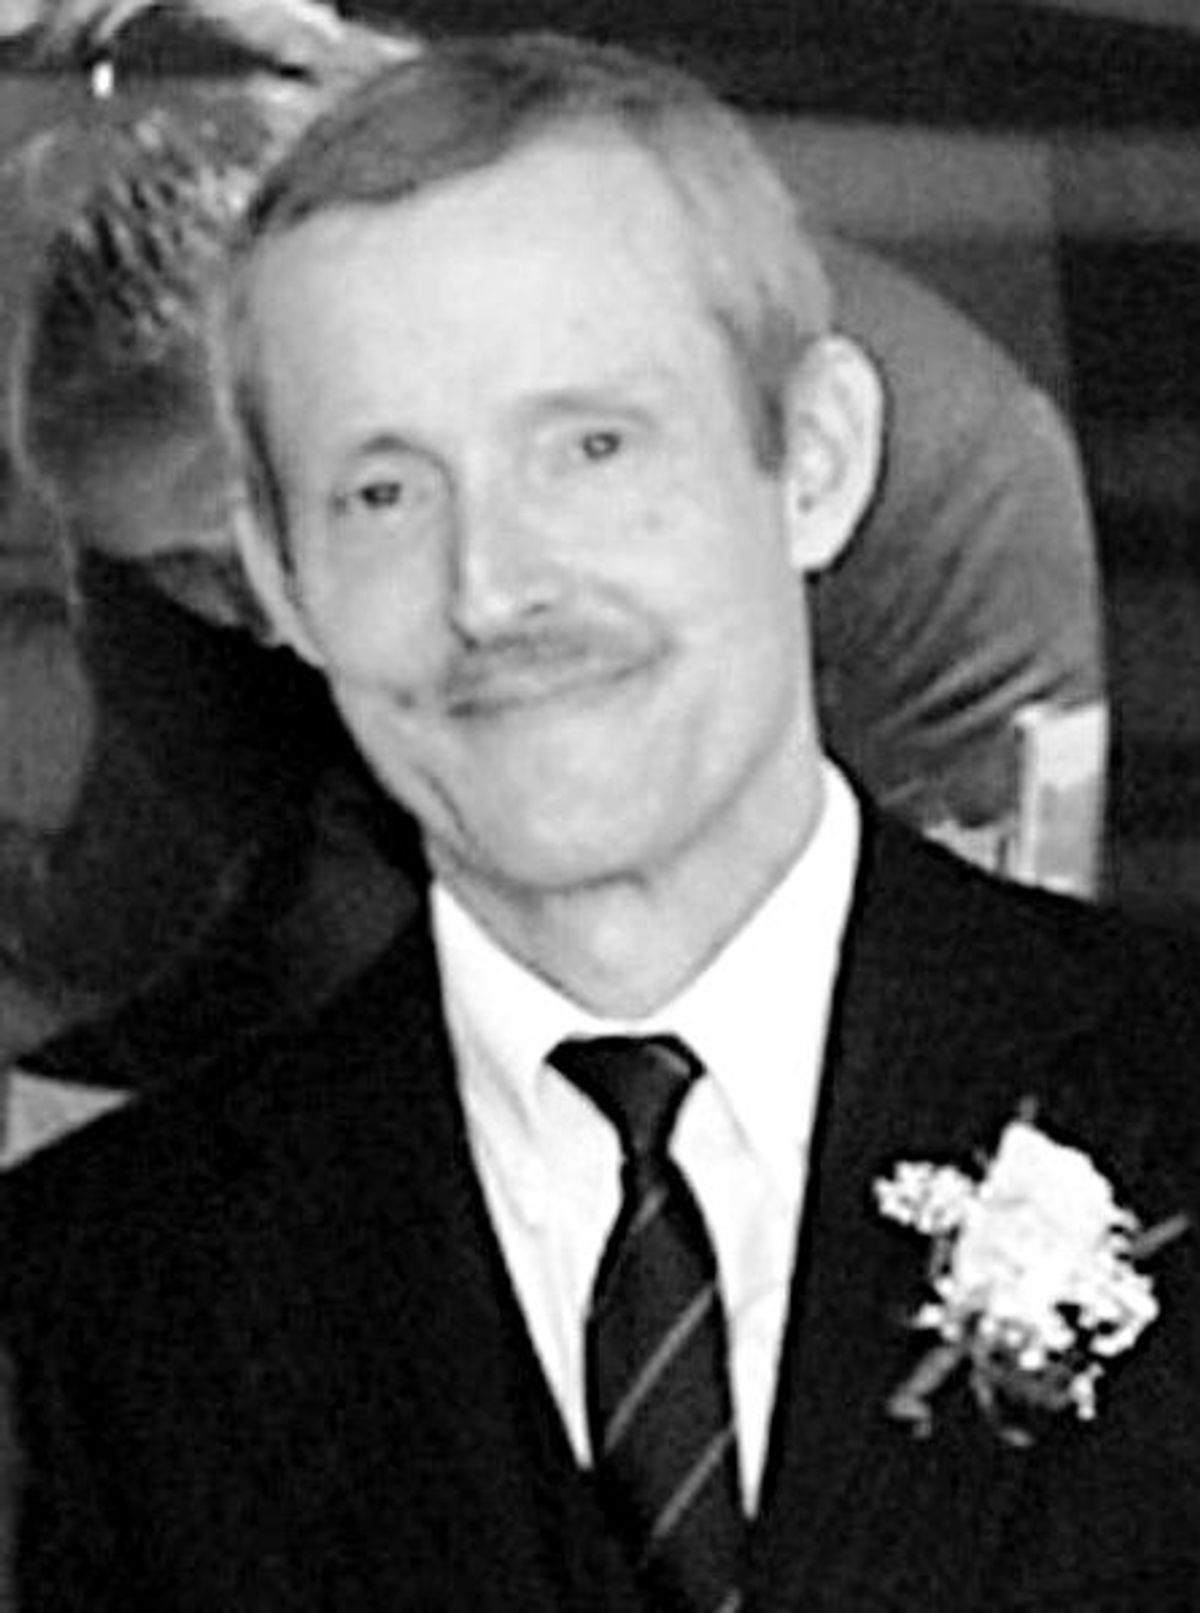 Bruce Ivins in 2003 